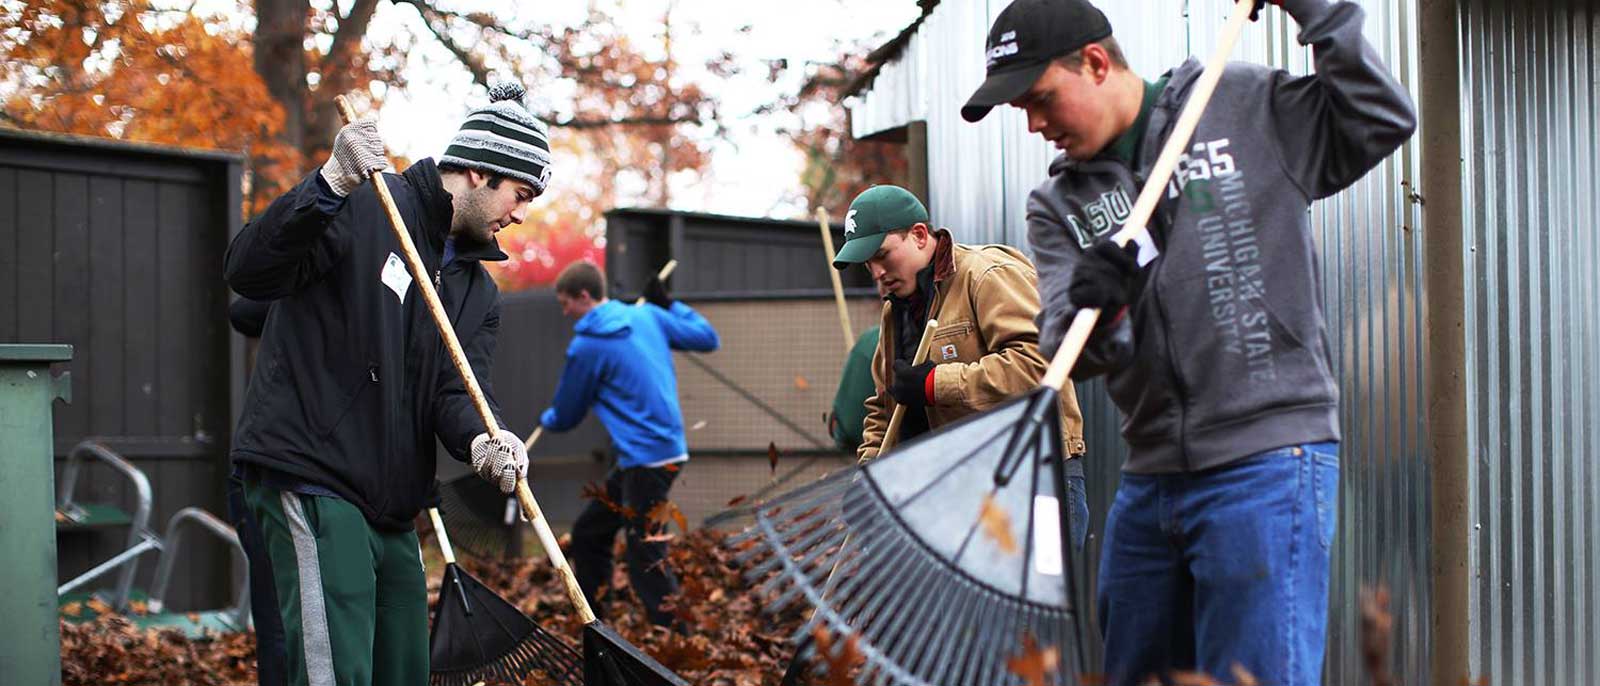 RBC students volunteering to clean up leaves.